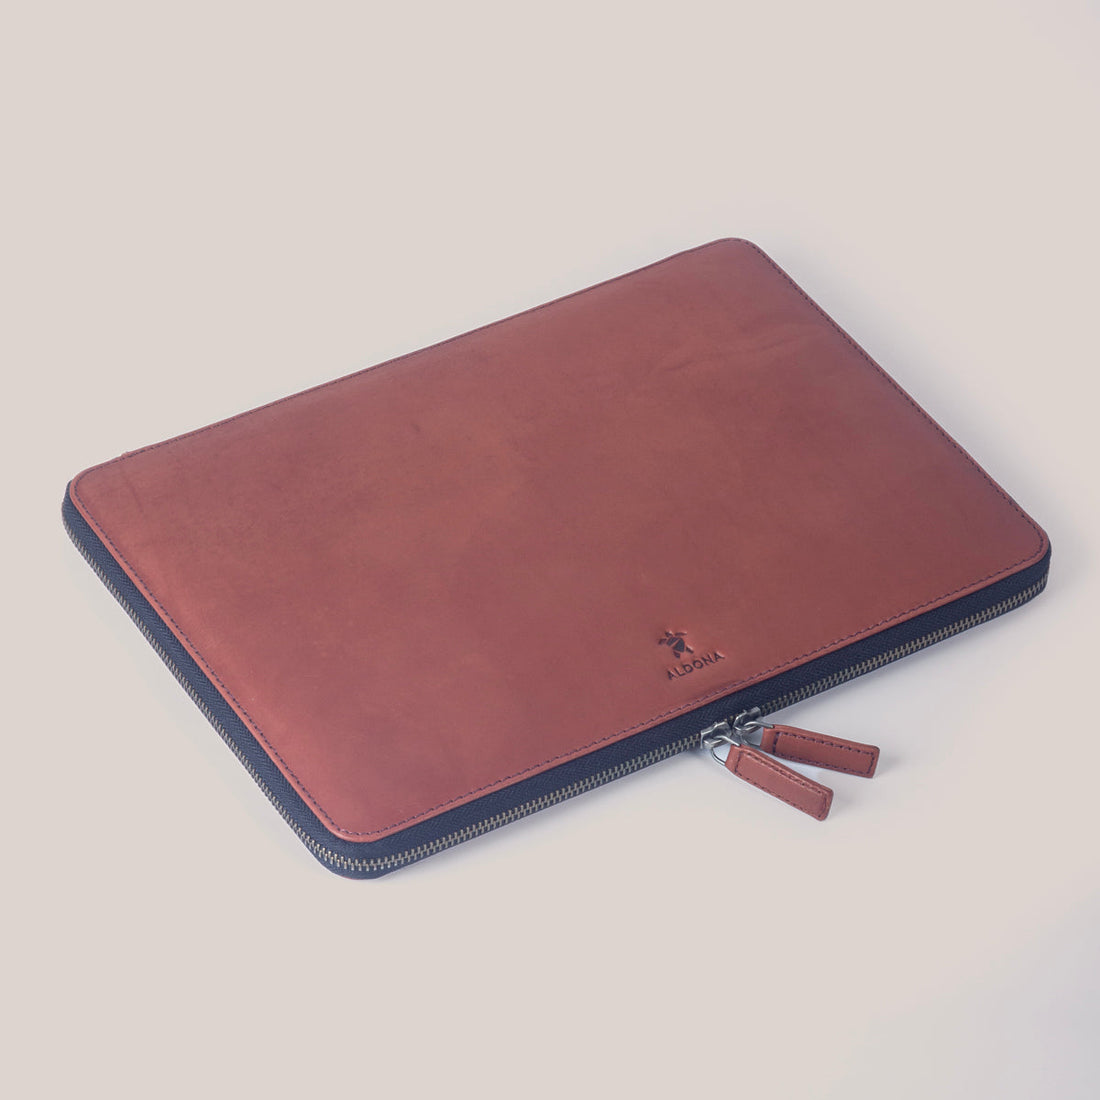 DELL XPS 15 Zippered Laptop Case - Vintage Tan